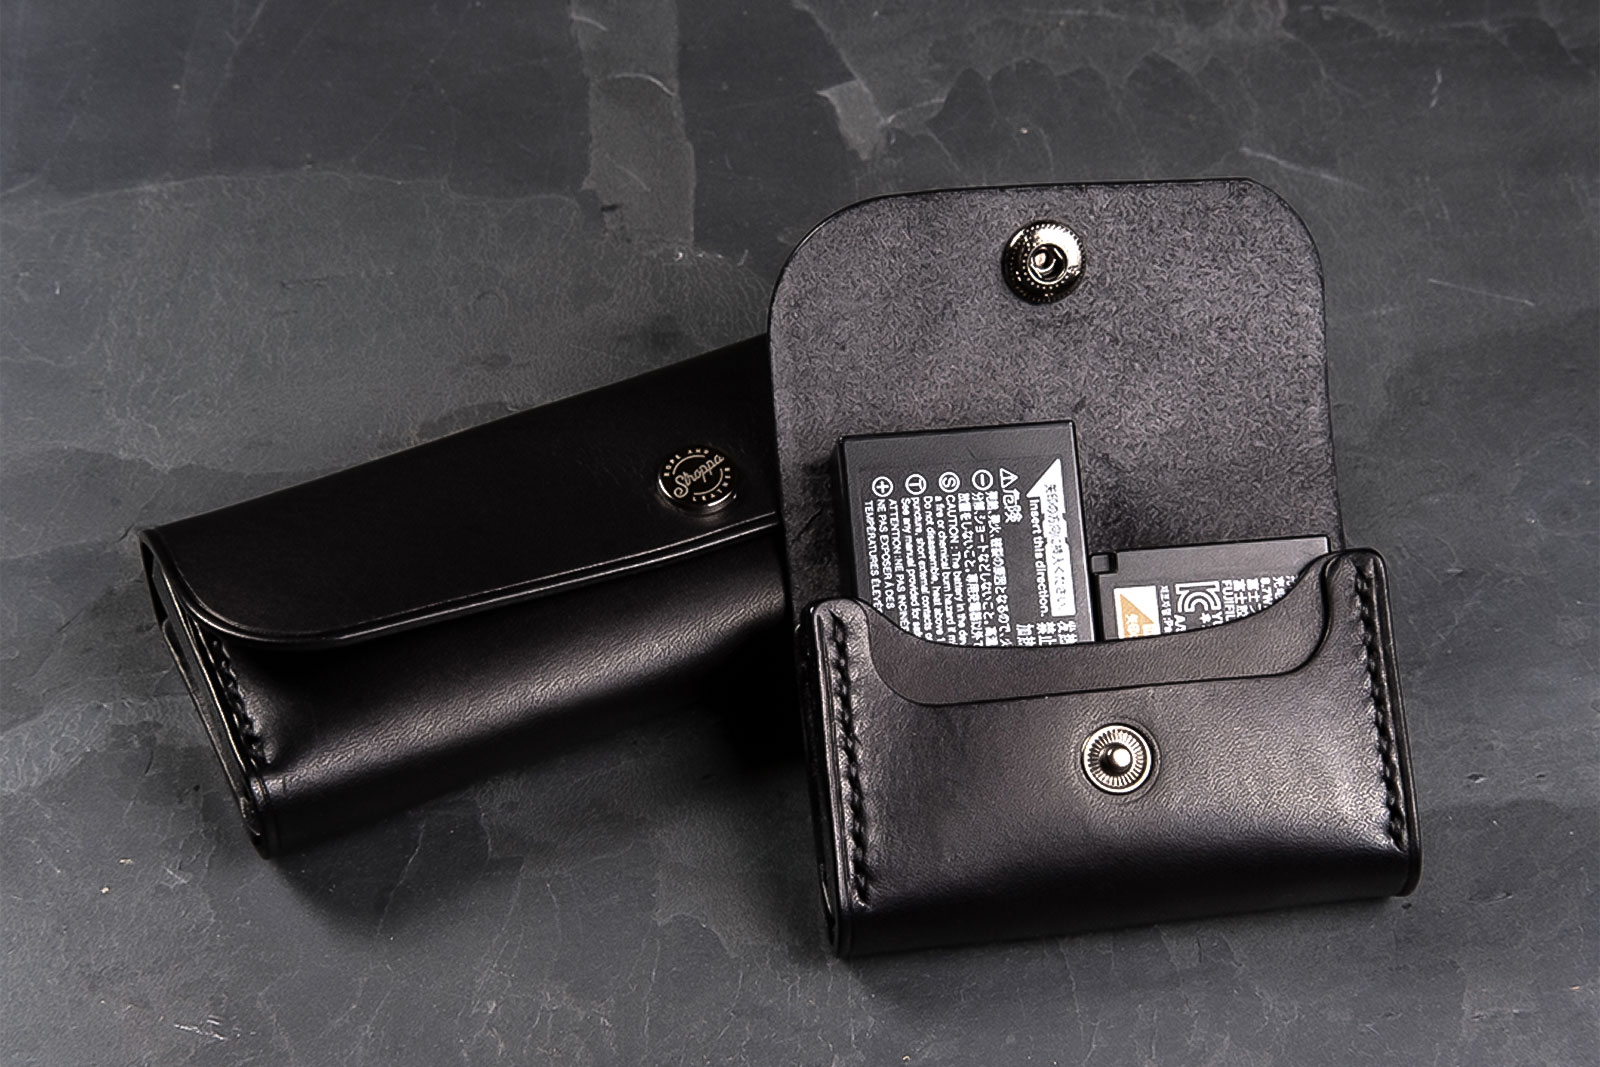 KNICKS Cordura Ballistic Fabric Hollow Tool Bag for Stepladder BA-KTB